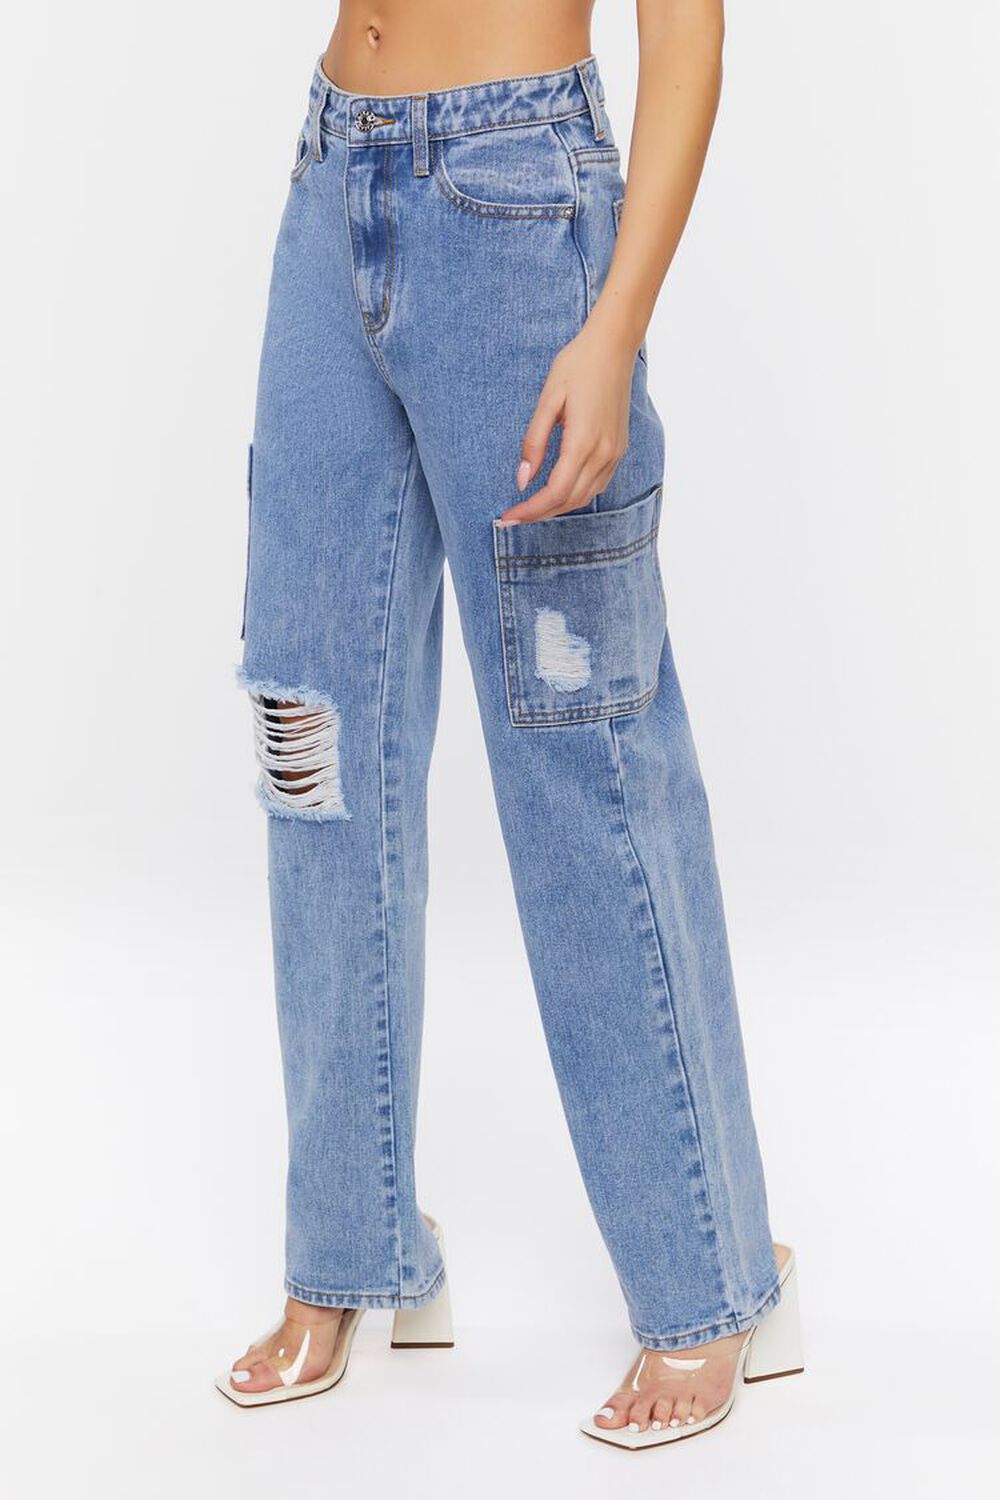 MEDIUM DENIM Distressed Straight-Leg Pocket Jeans, image 3